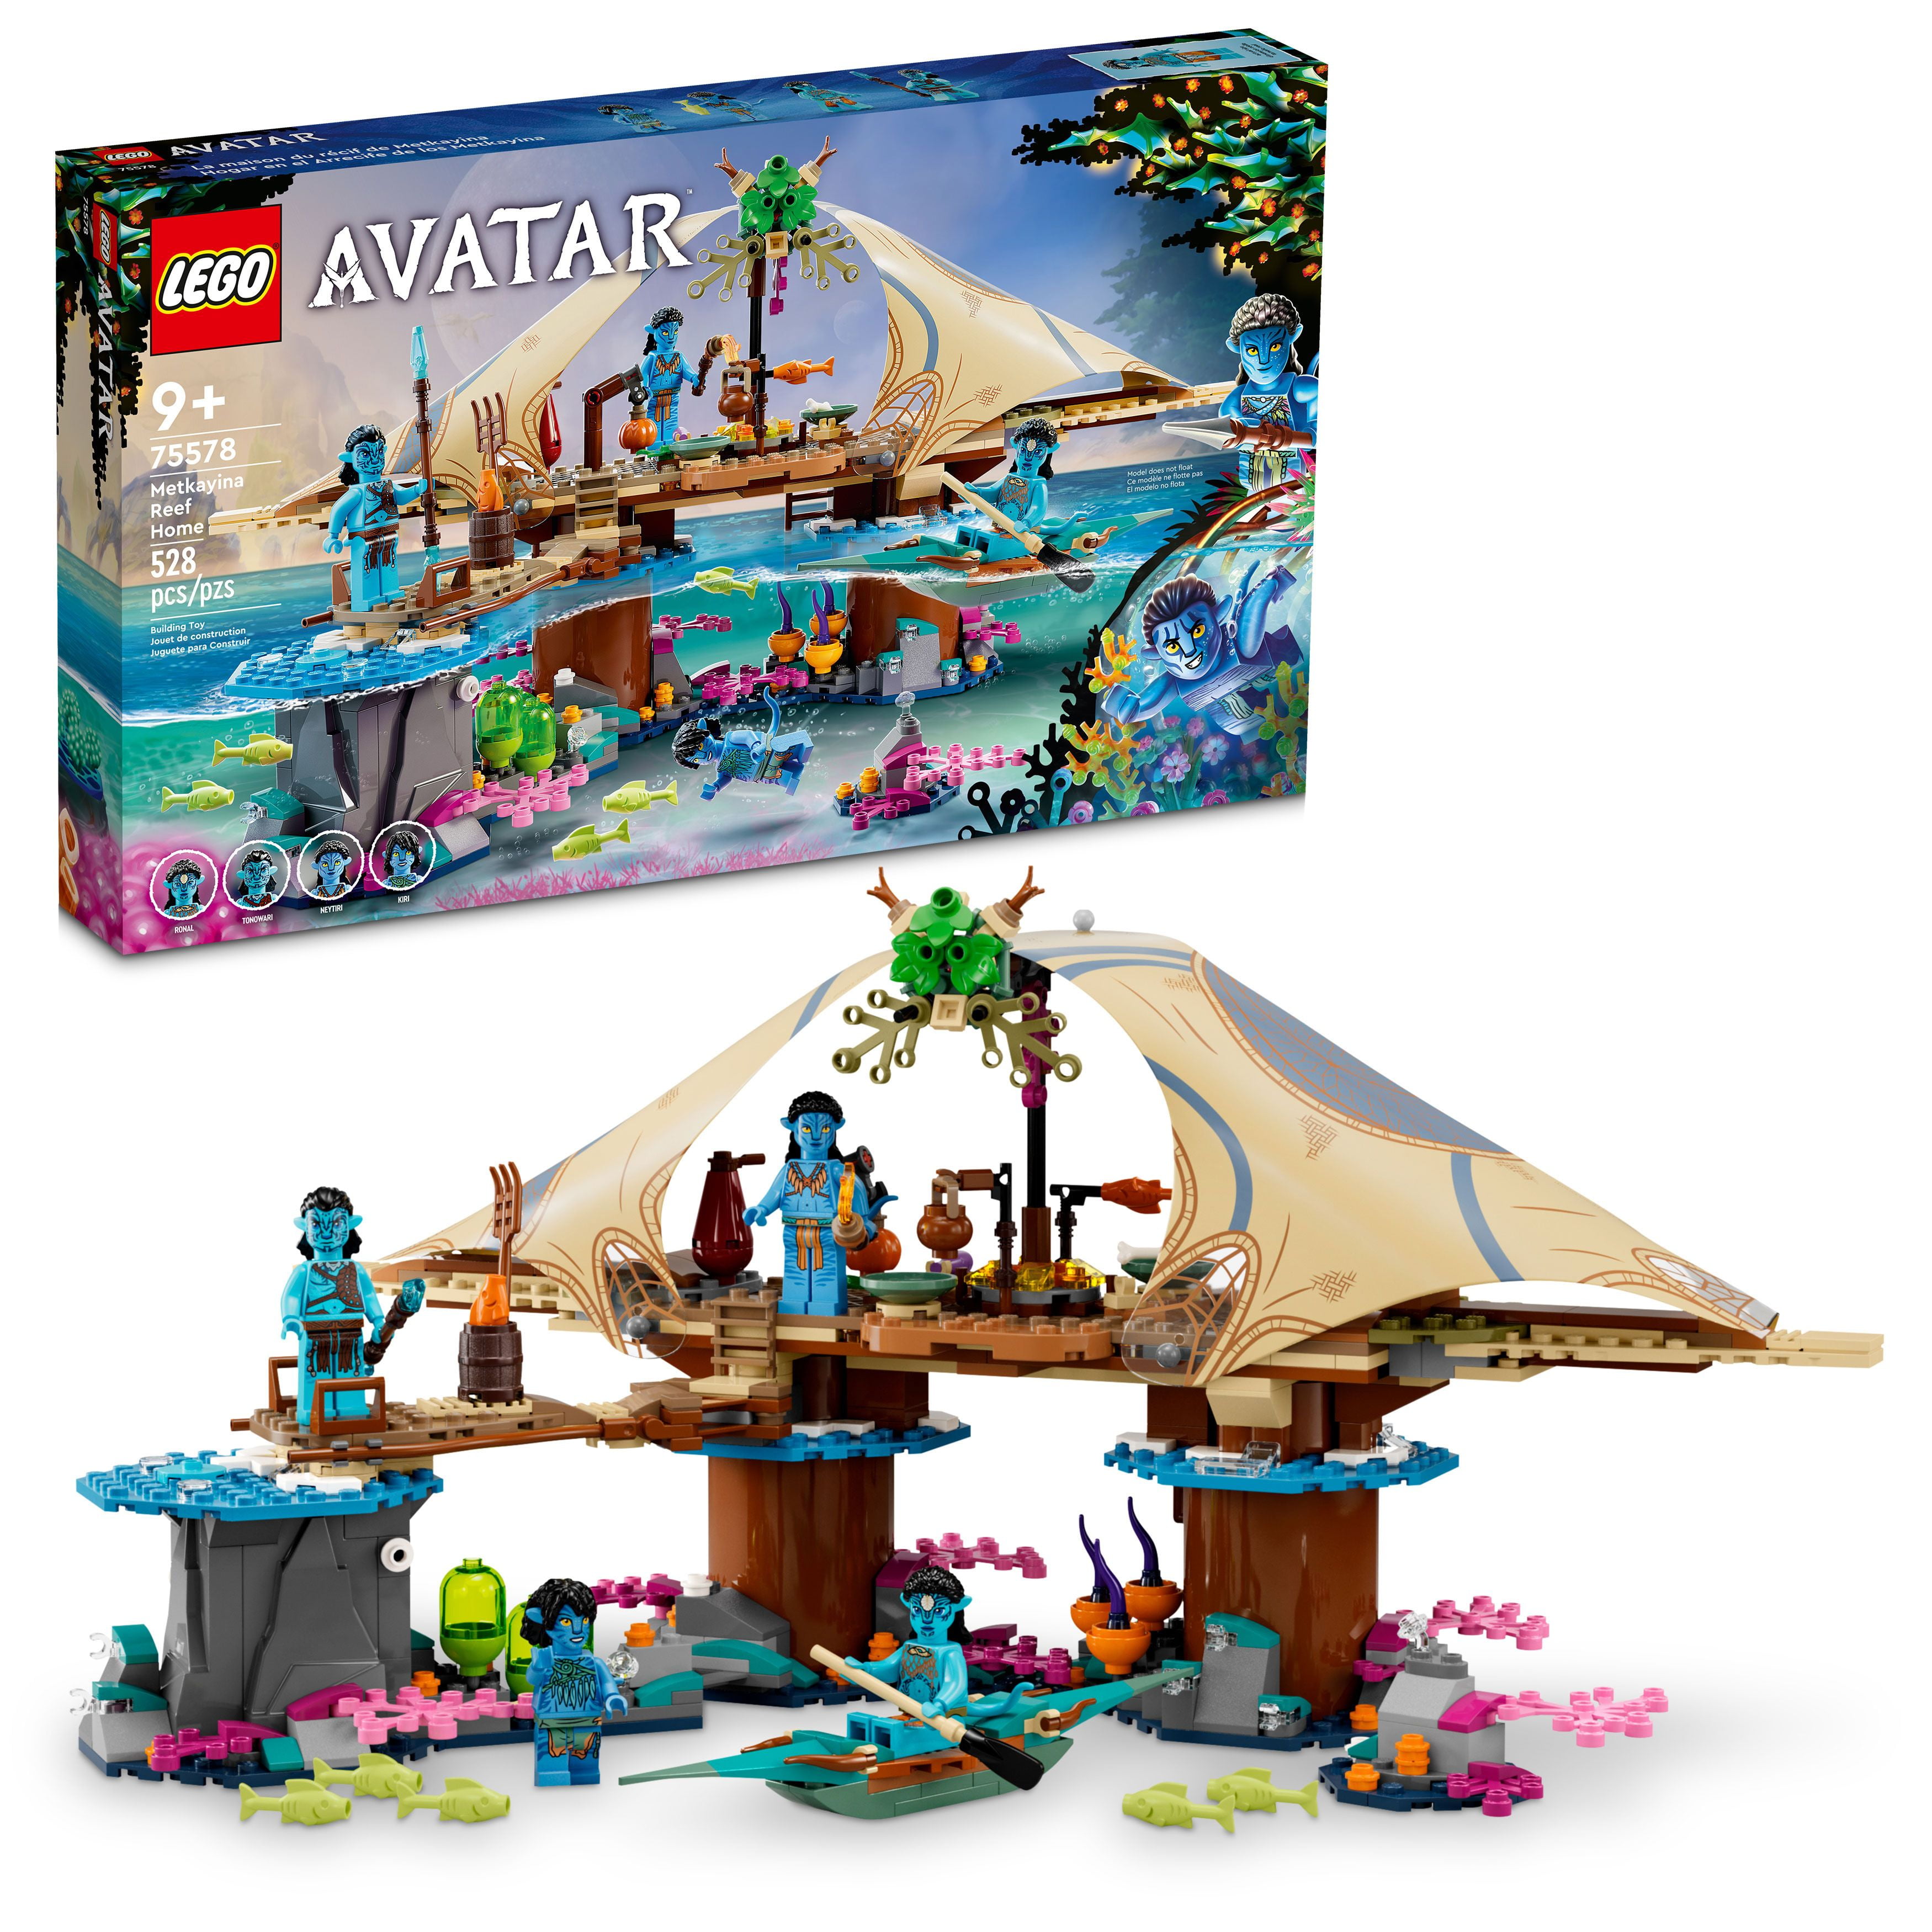 LEGO Avatar: The Way of Water Metkayina Reef Home 75578, Building Toy Set with Village, Canoe, Pandora Scenes, Neytiri Tonowari Minifigures - Walmart.com